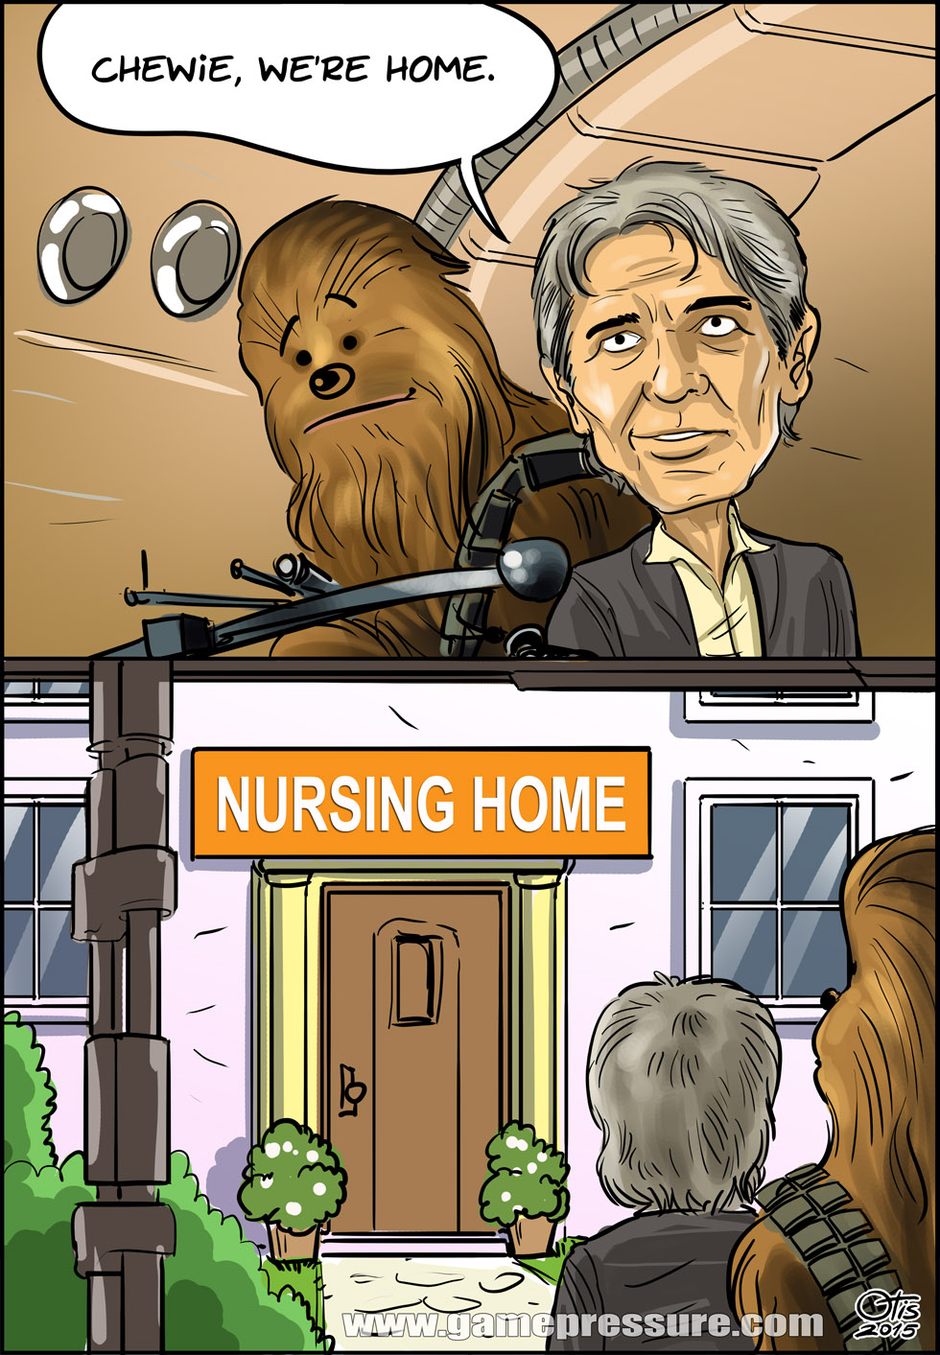 Home, comics Cartoon Wars, #65. Chewie, we're home...